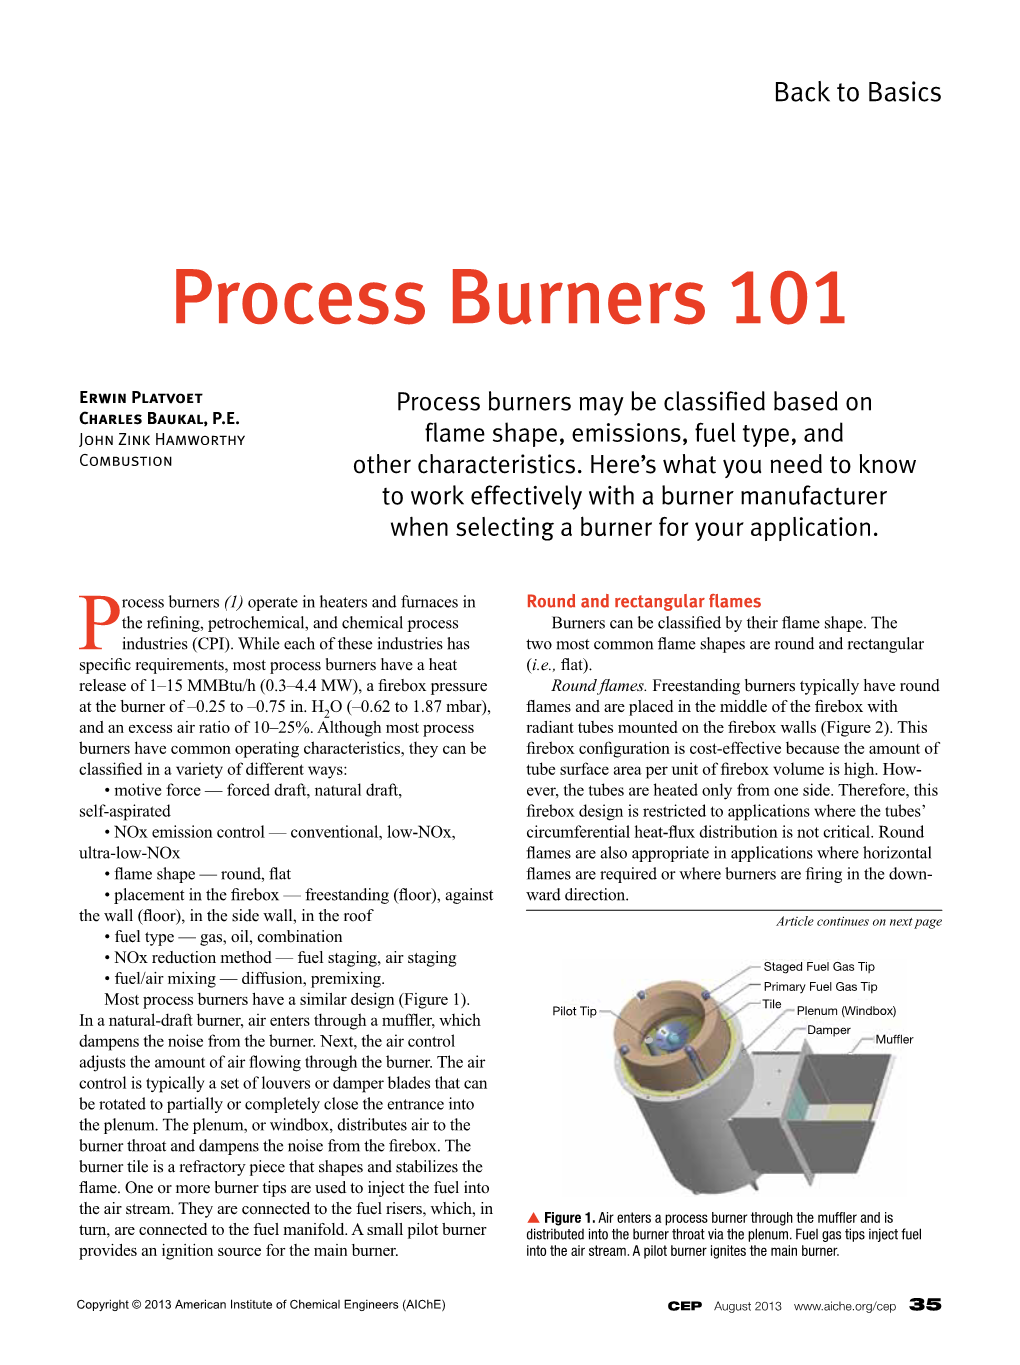 Process Burners 101